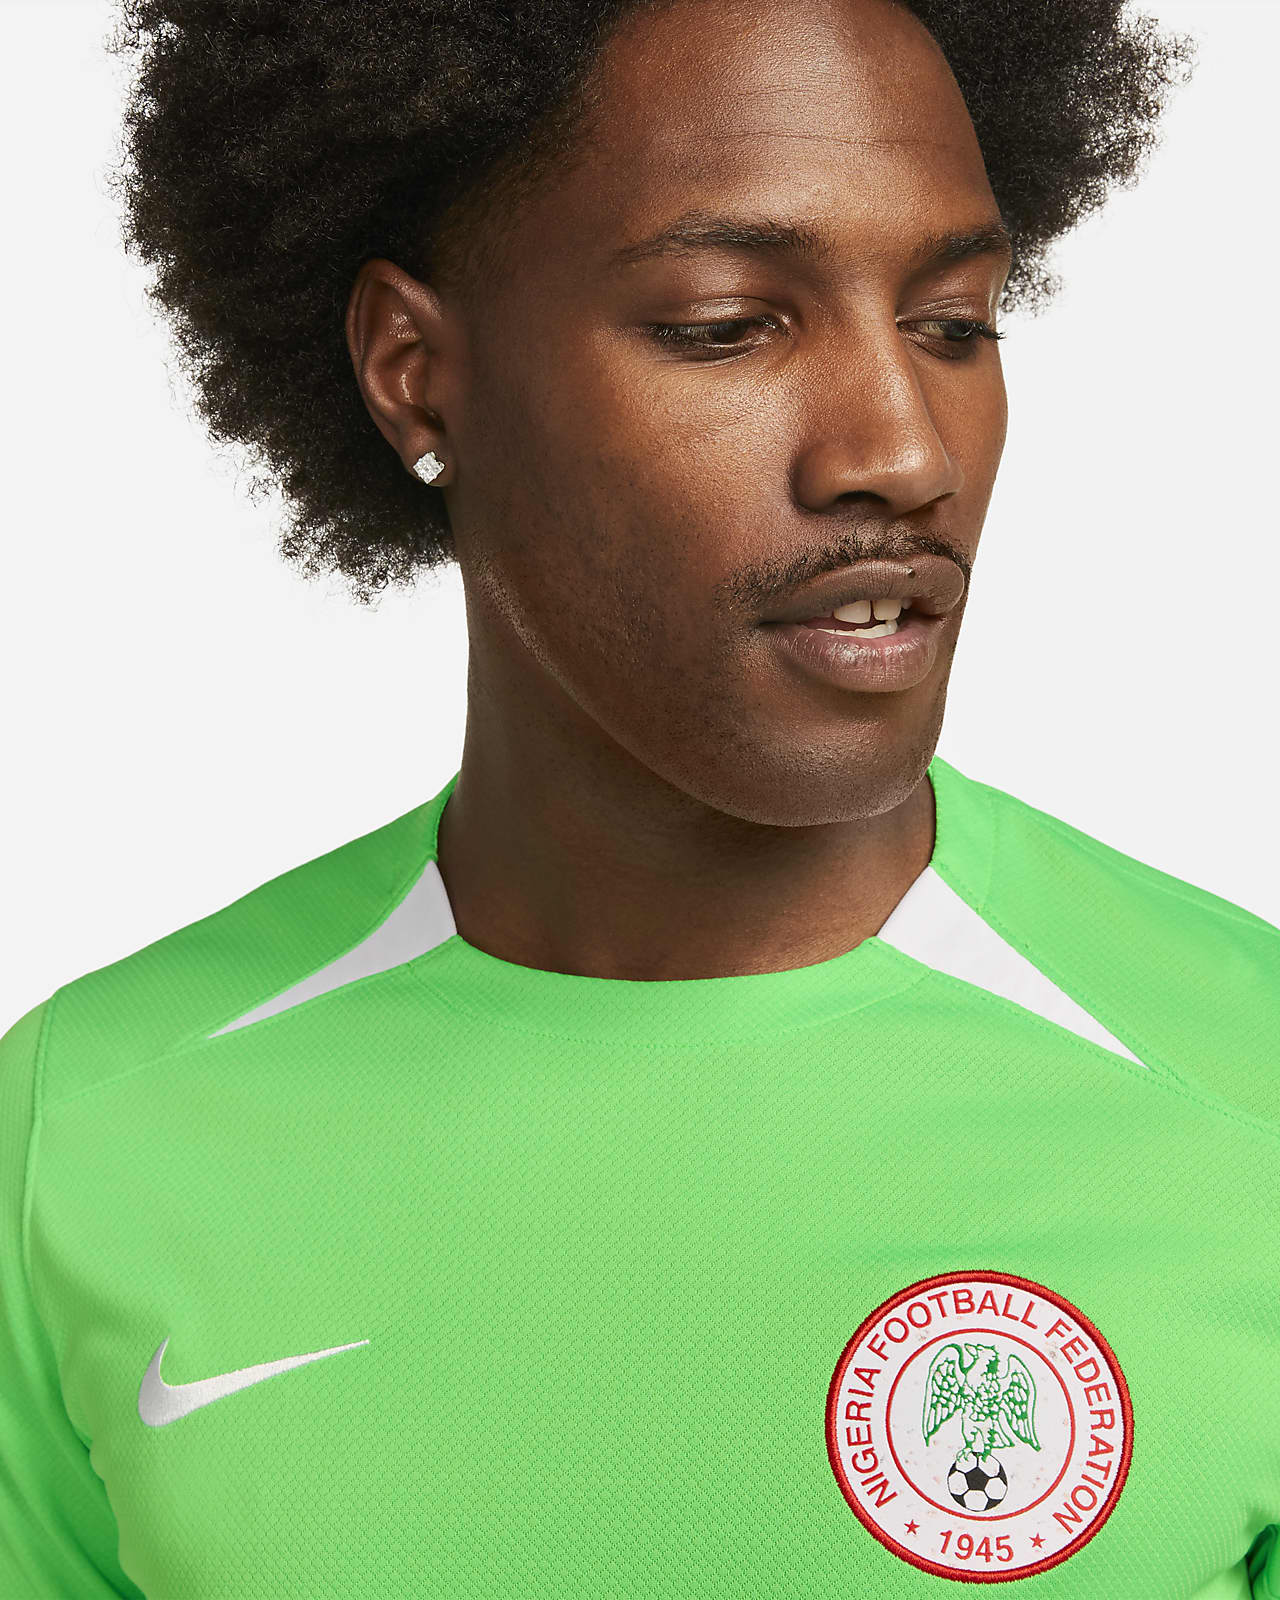 nigeria national football team jersey